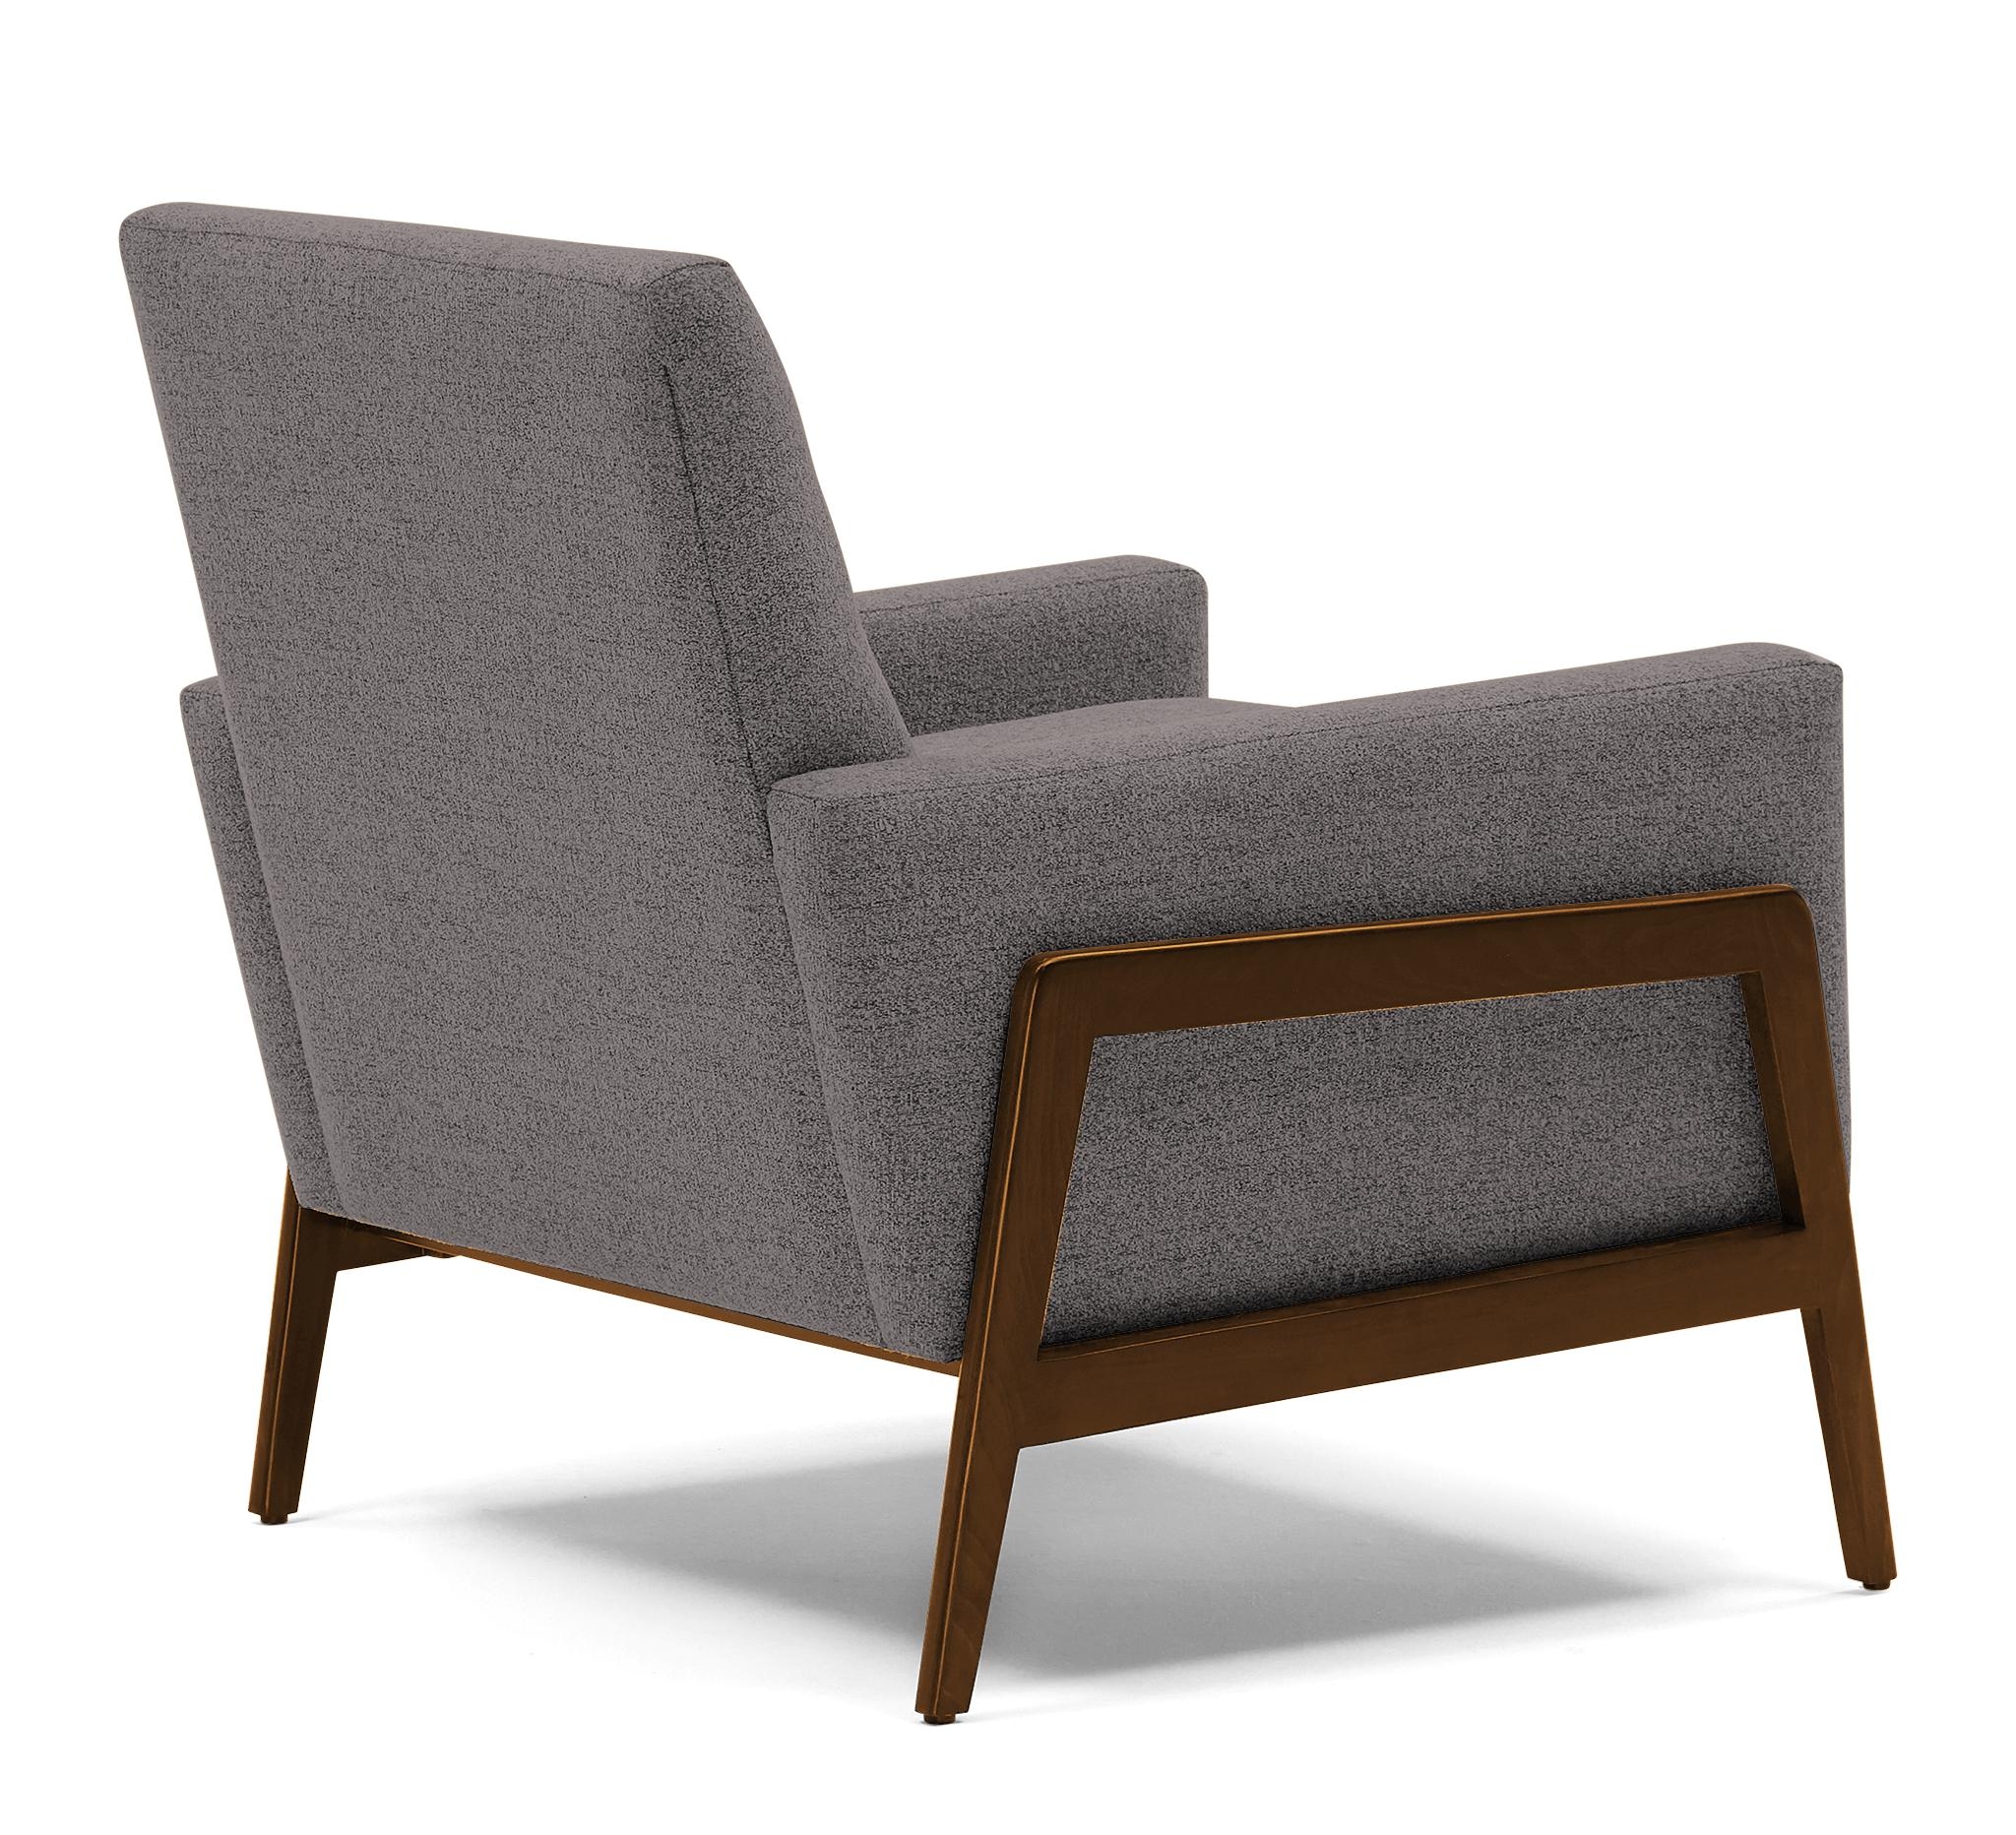 Gray Clyde Mid Century Modern Chair - Taylor Felt Grey - Mocha - Image 3